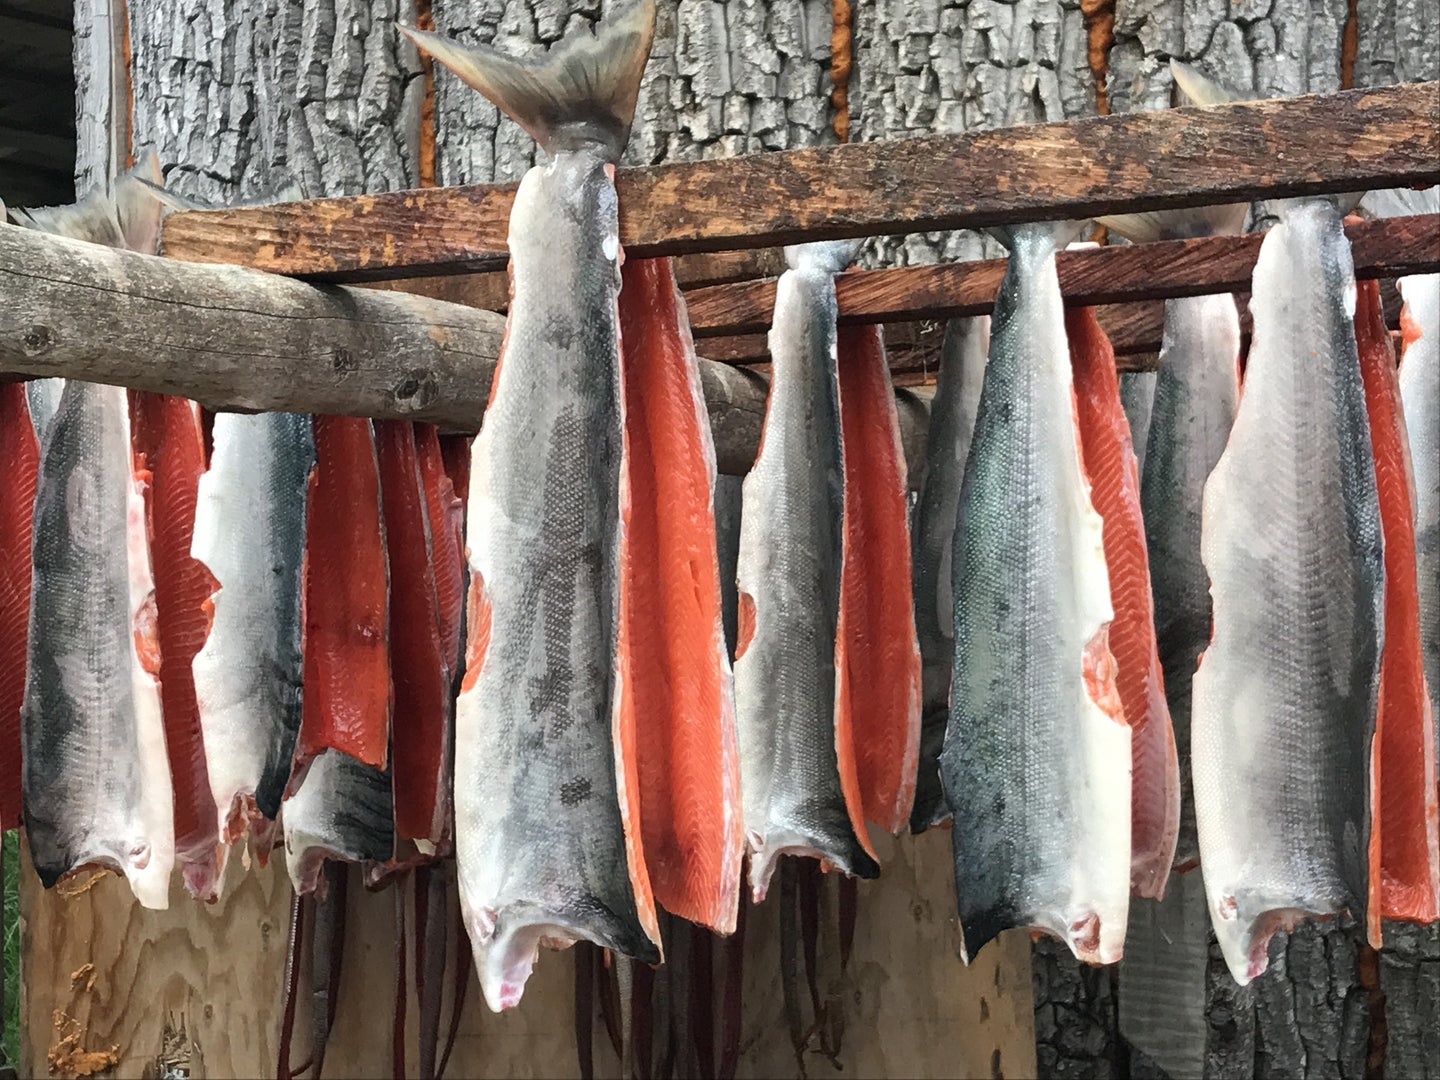 Salmon fillets hanging on sticks in Alaska.